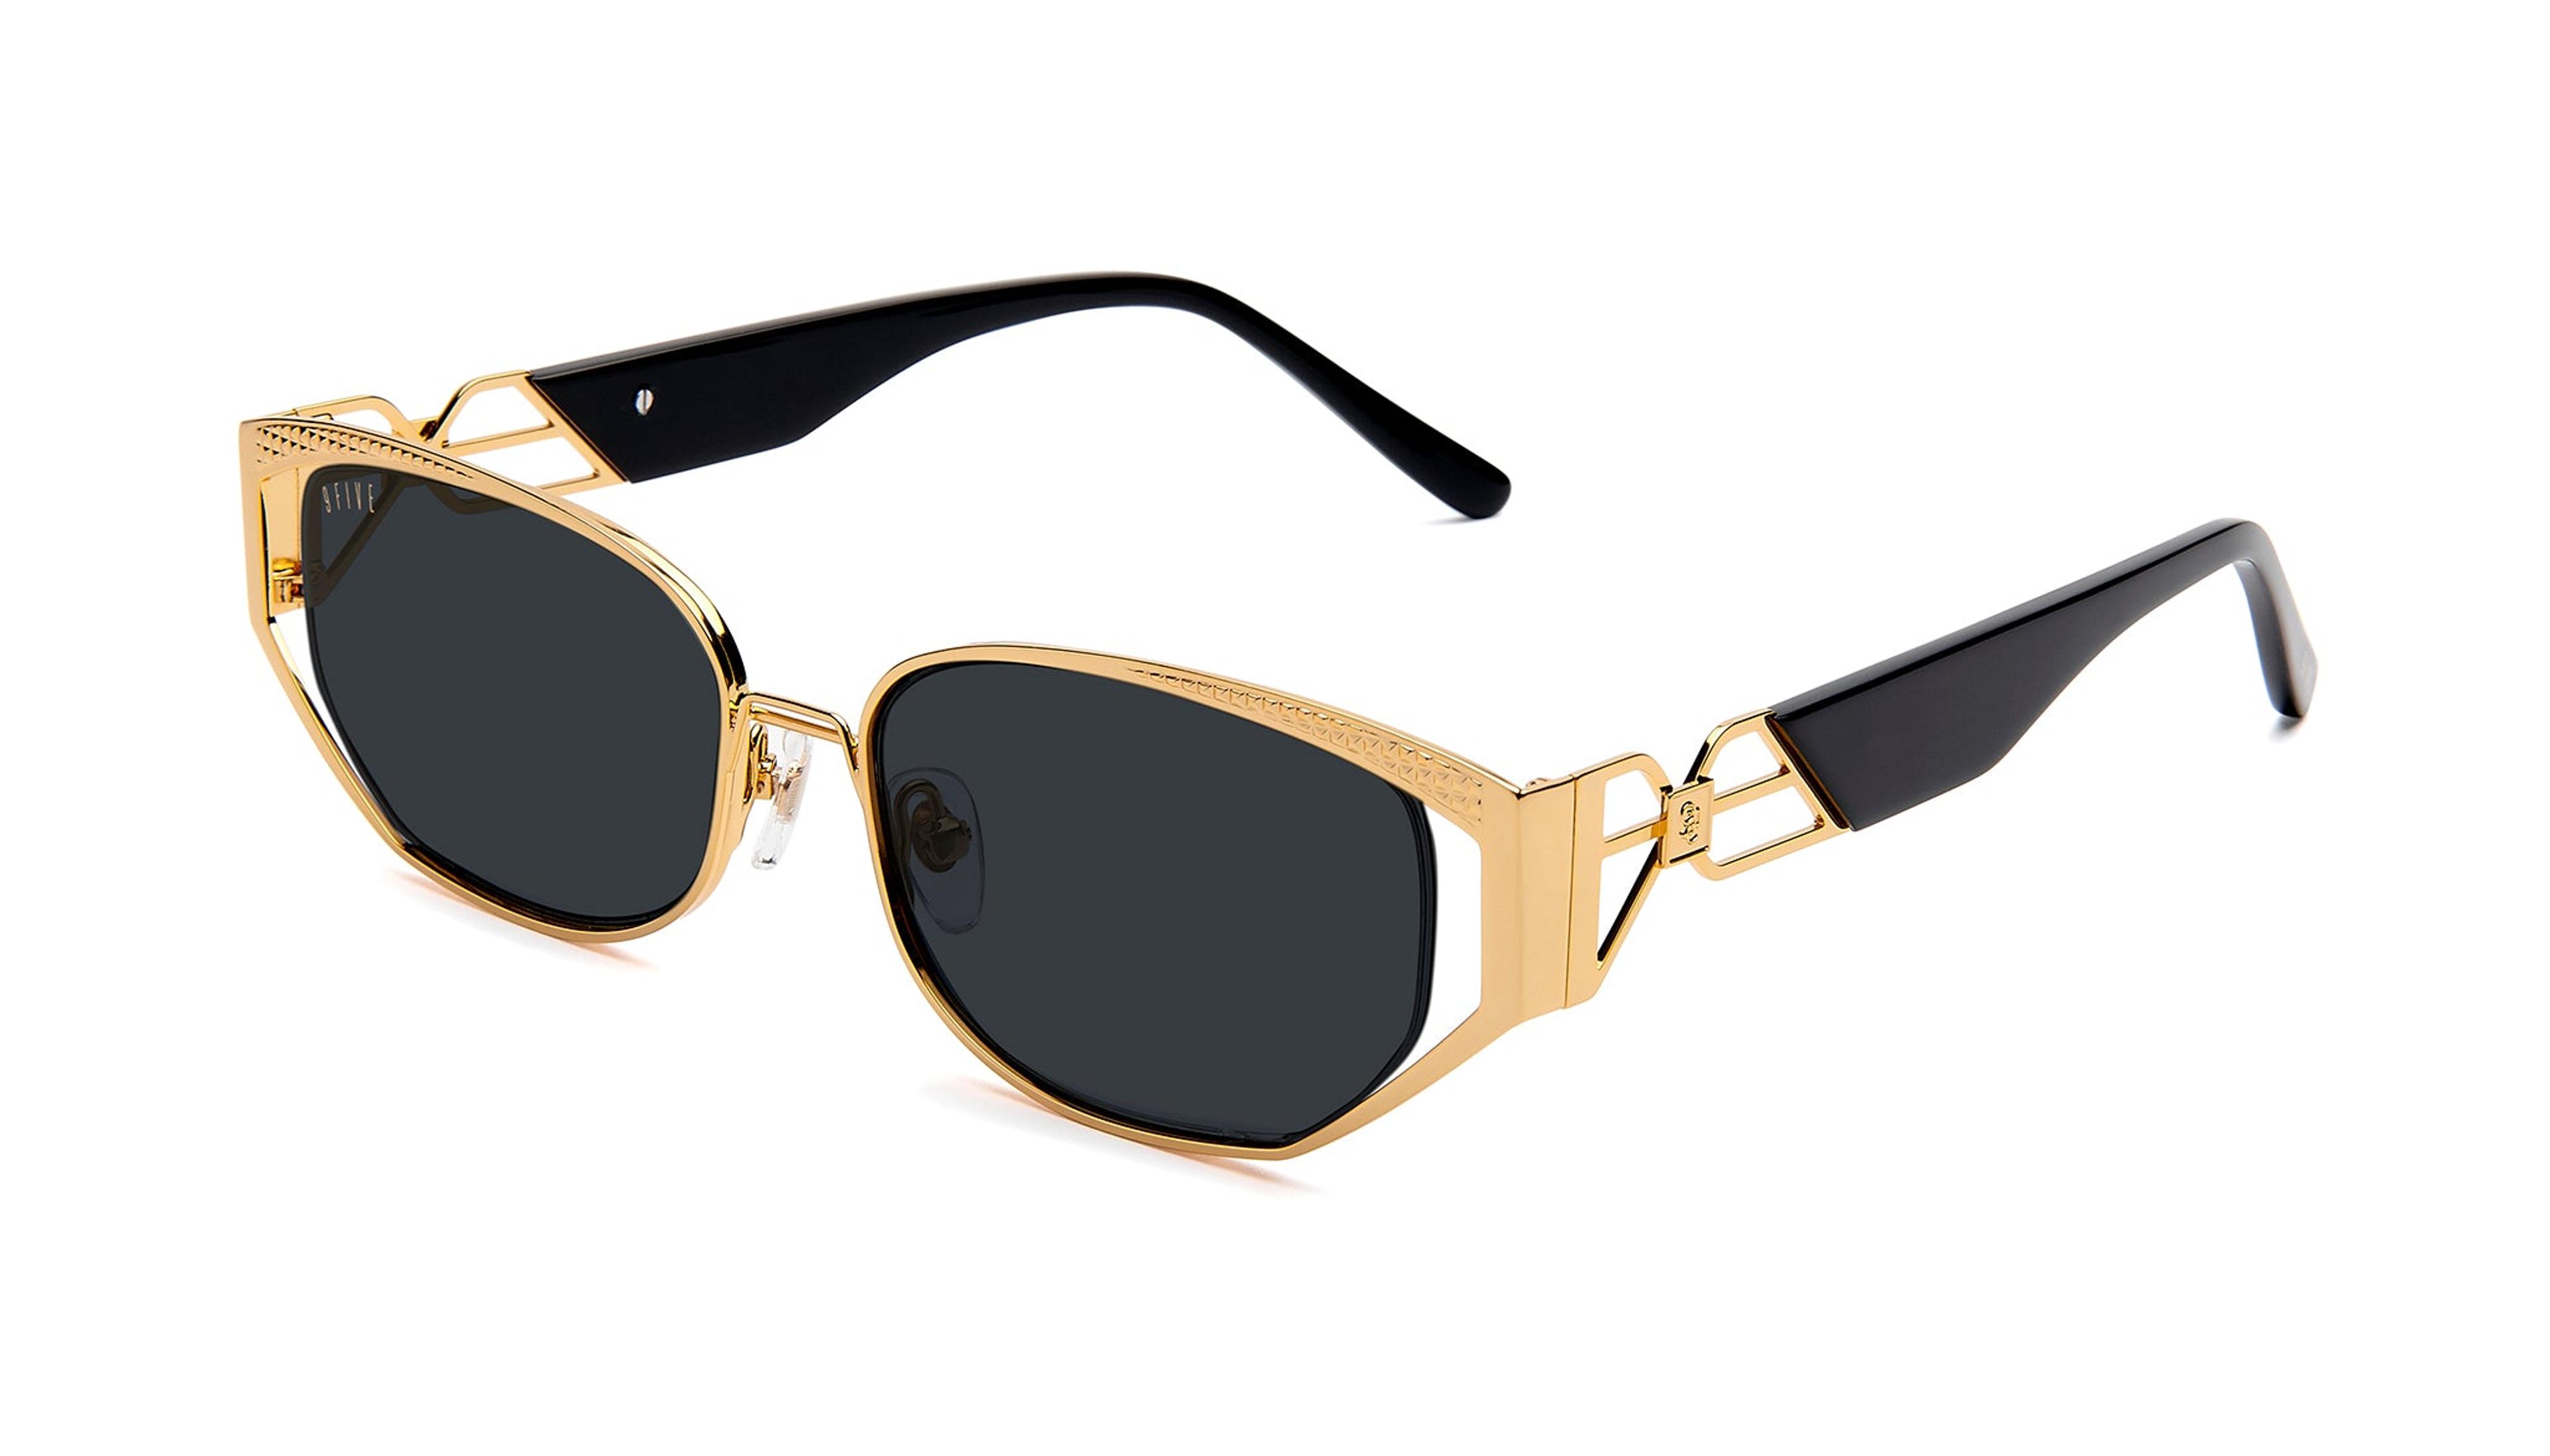 NTWRK - 9FIVE Cross Black & 24K Gold Sunglasses